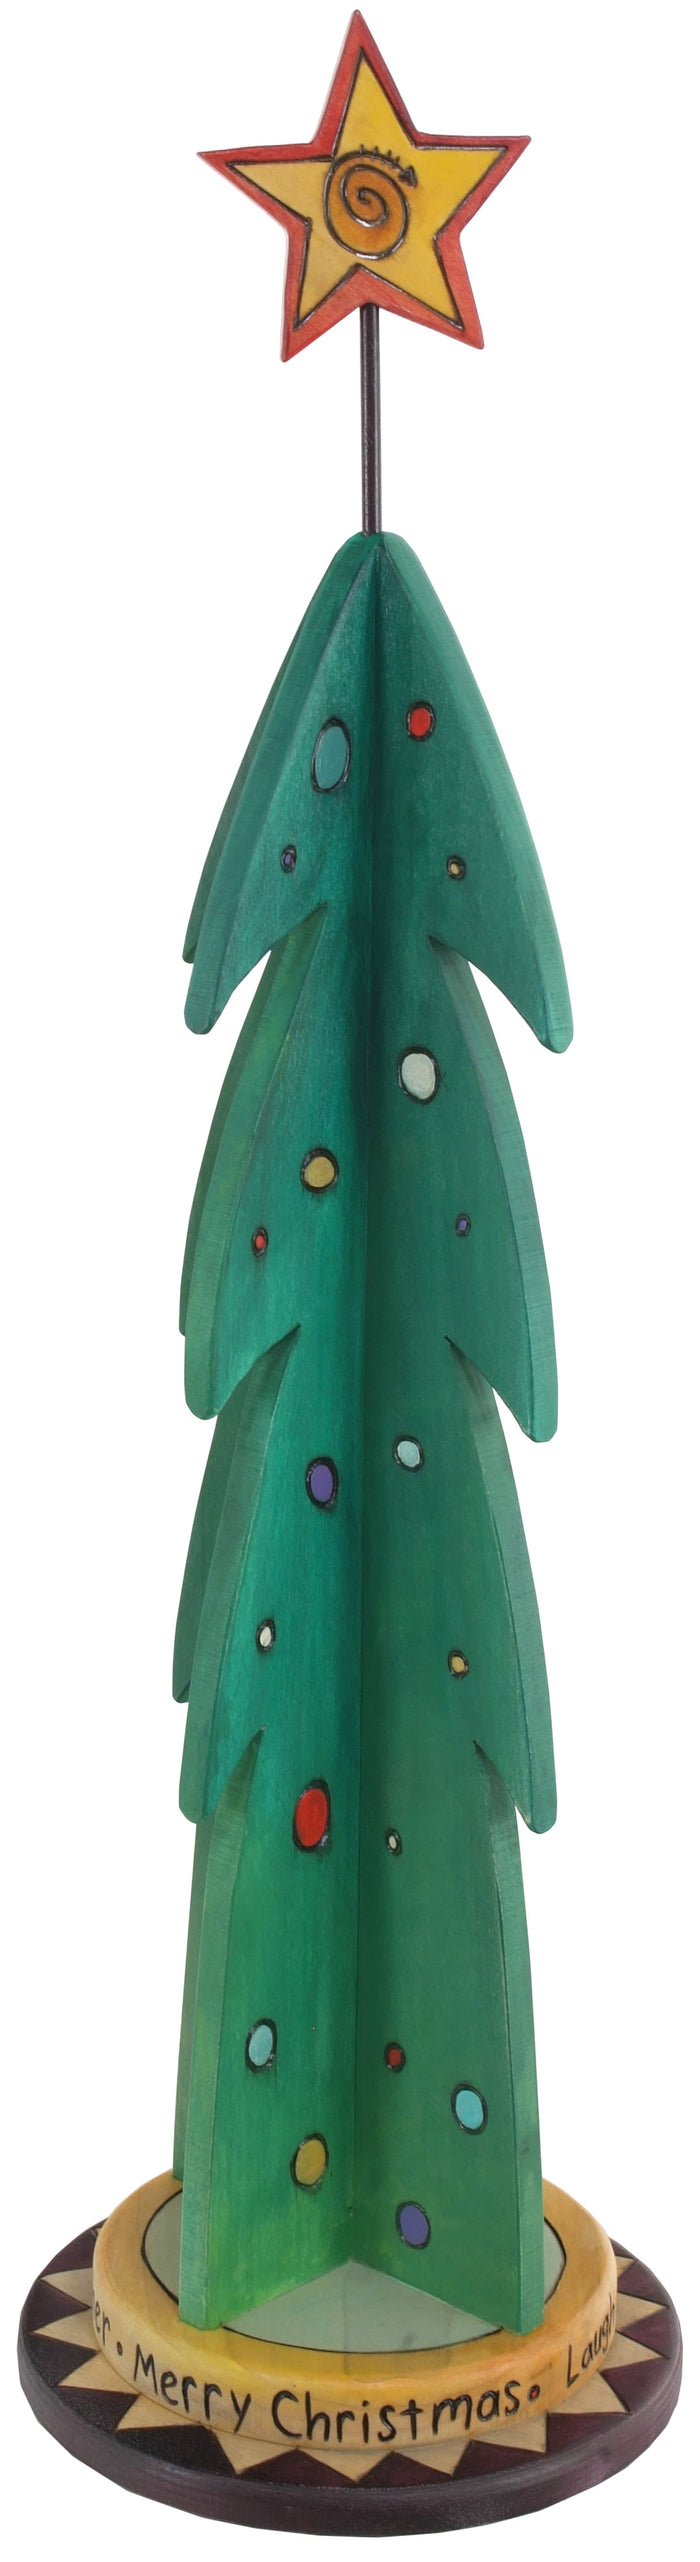 Medium Christmas Tree Sculpture